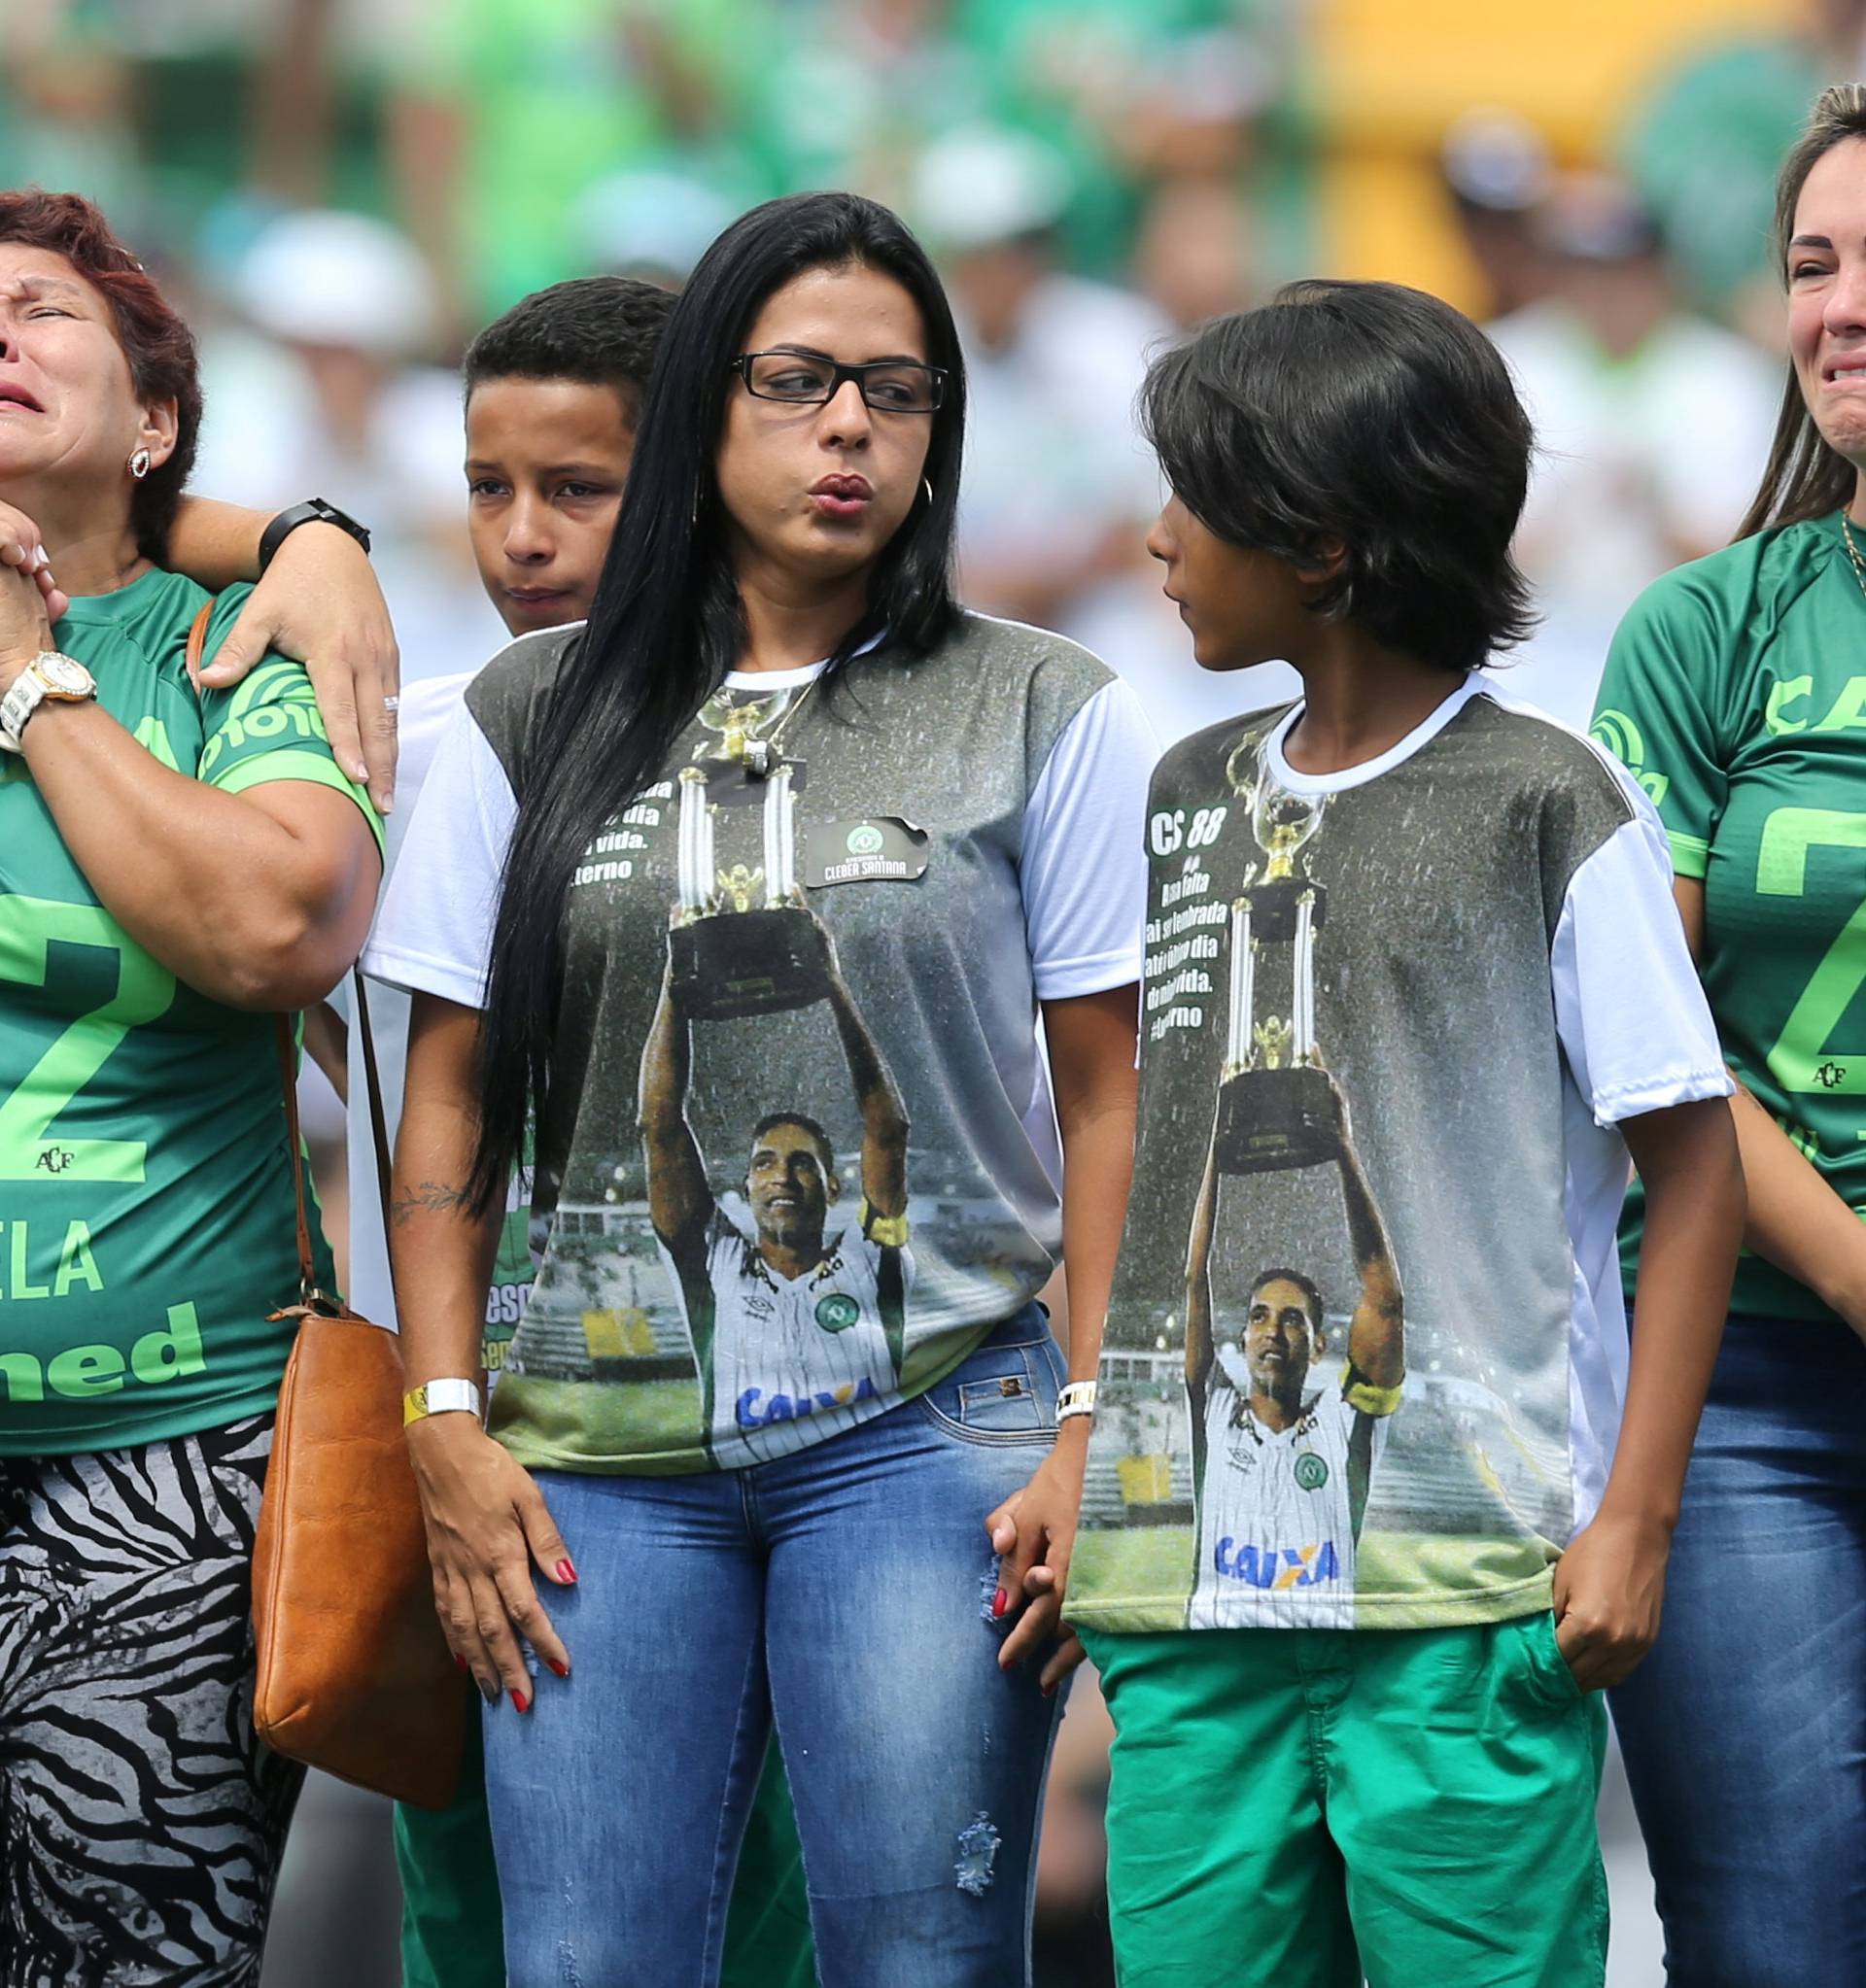 Football Soccer - Chapecoense v Palmeiras - Charity match